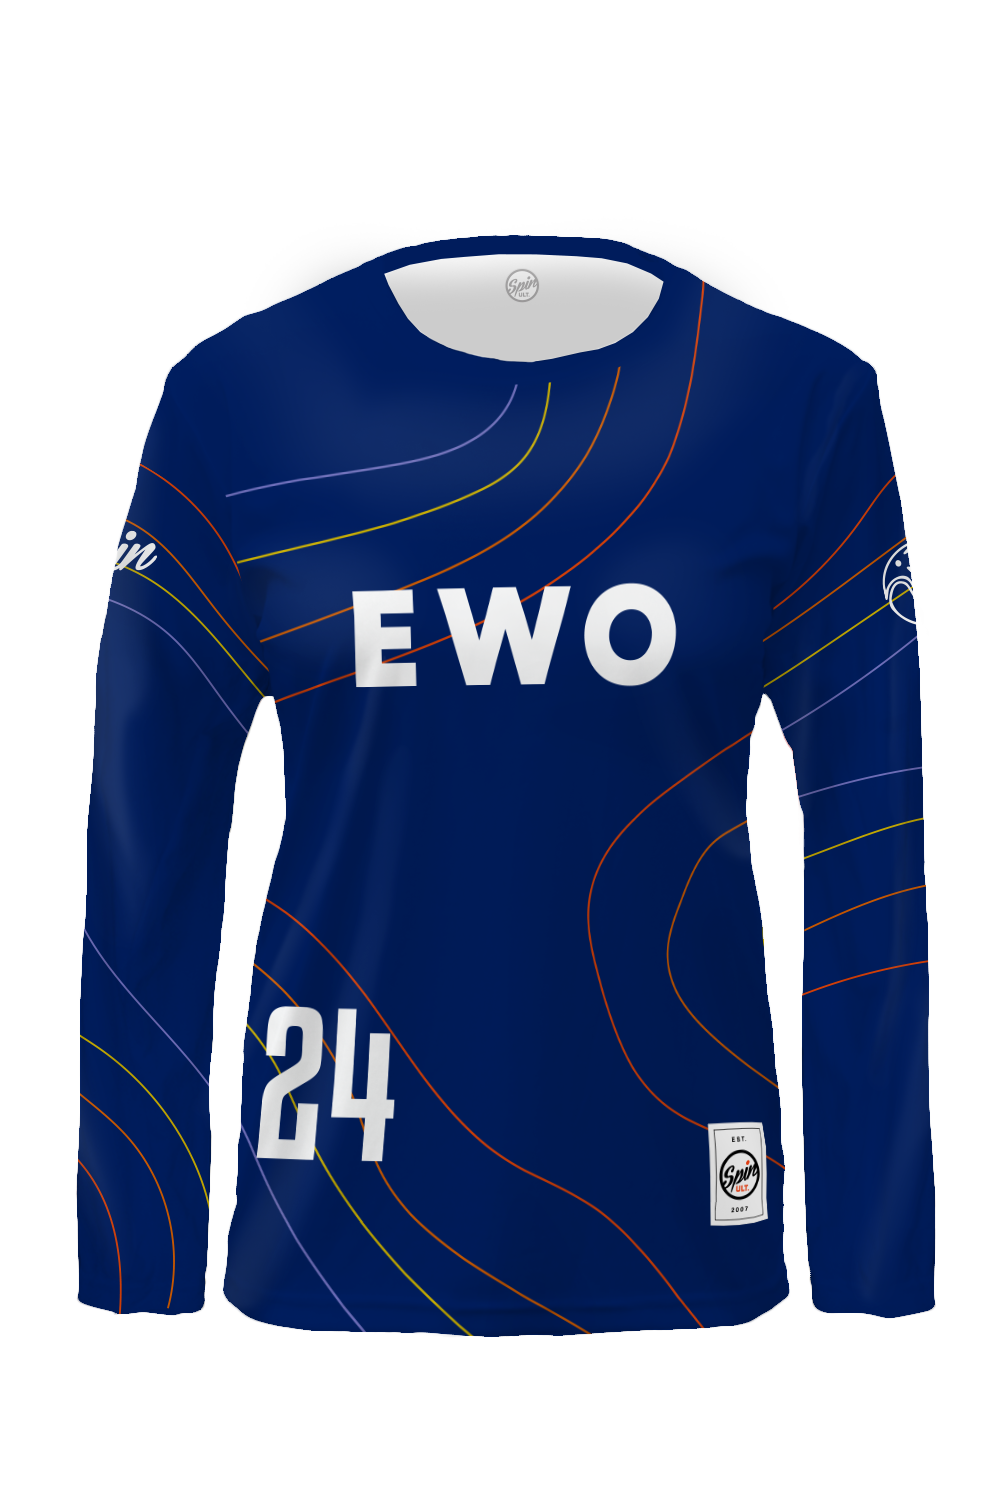 EWO Long Sleeve Jersey (Blue)